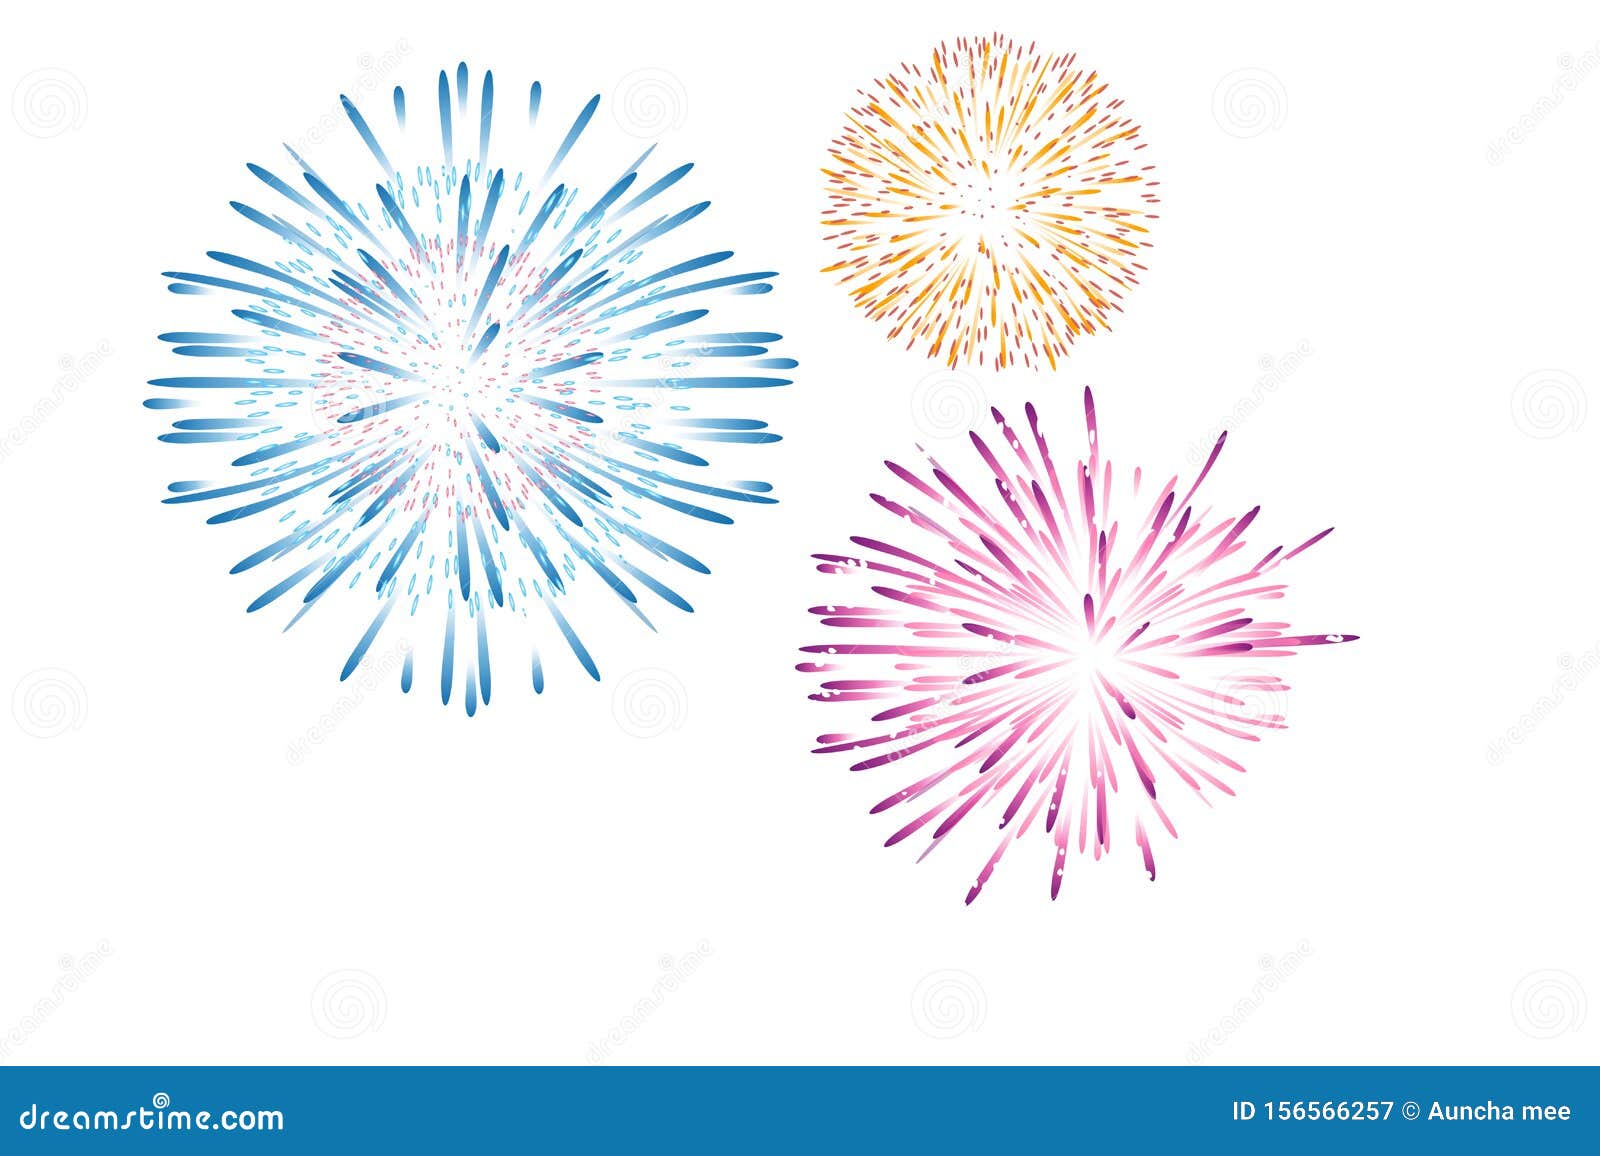 Fireworks Display Celebration on White Background. Illustration Design  Stock Image - Image of event, abstract: 156566257